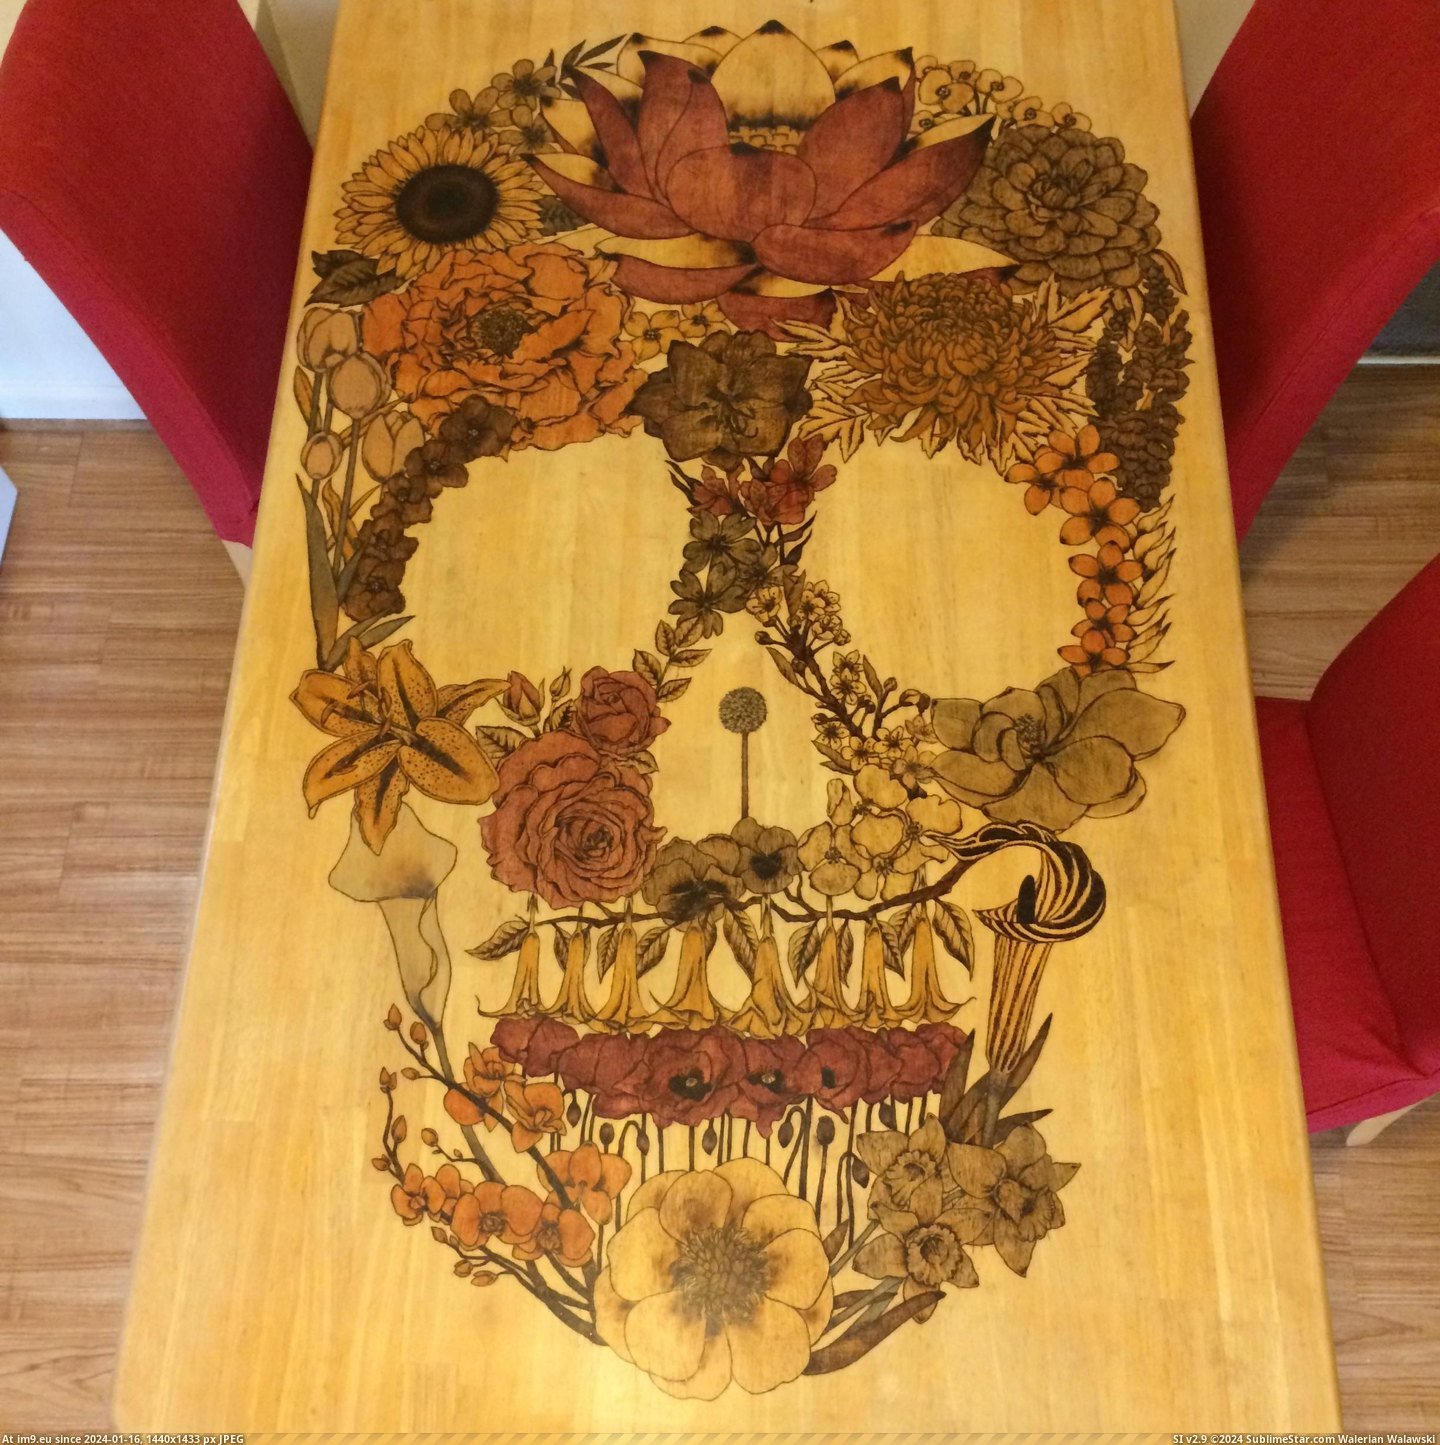 #Kitchen #Skull #Woodburning #Flower [Pics] Flower Skull Woodburning On Kitchen Table Pic. (Obraz z album My r/PICS favs))